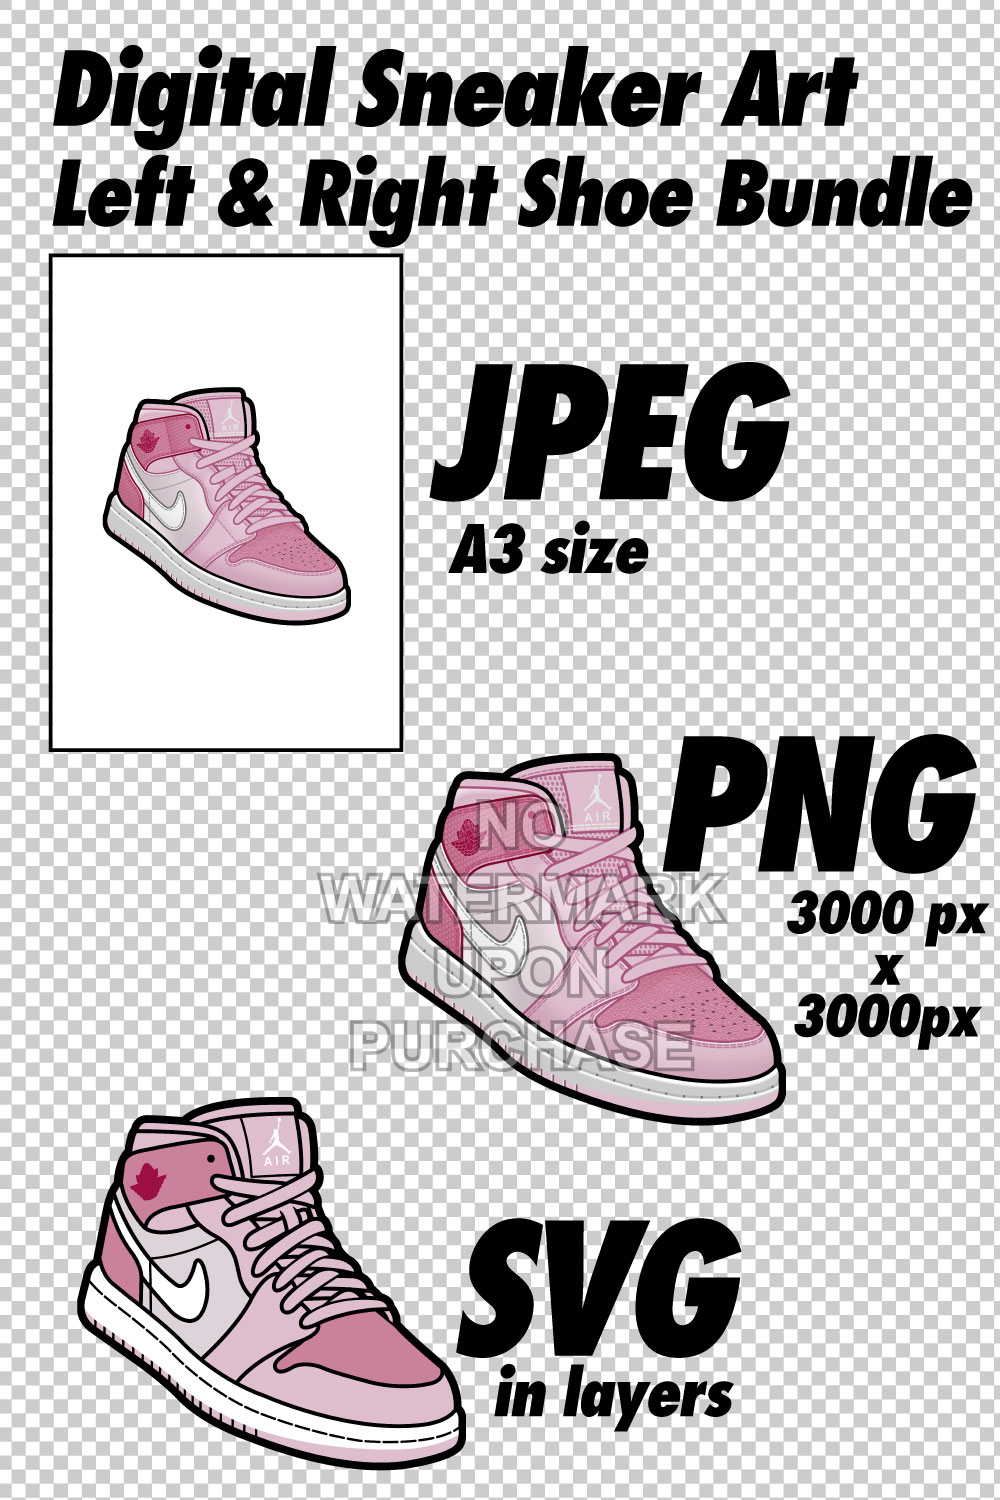 Air Jordan 1 MID Digital Pink JPEG PNG SVG Sneaker Art right & left shoe bundle Digital Download pinterest preview image.